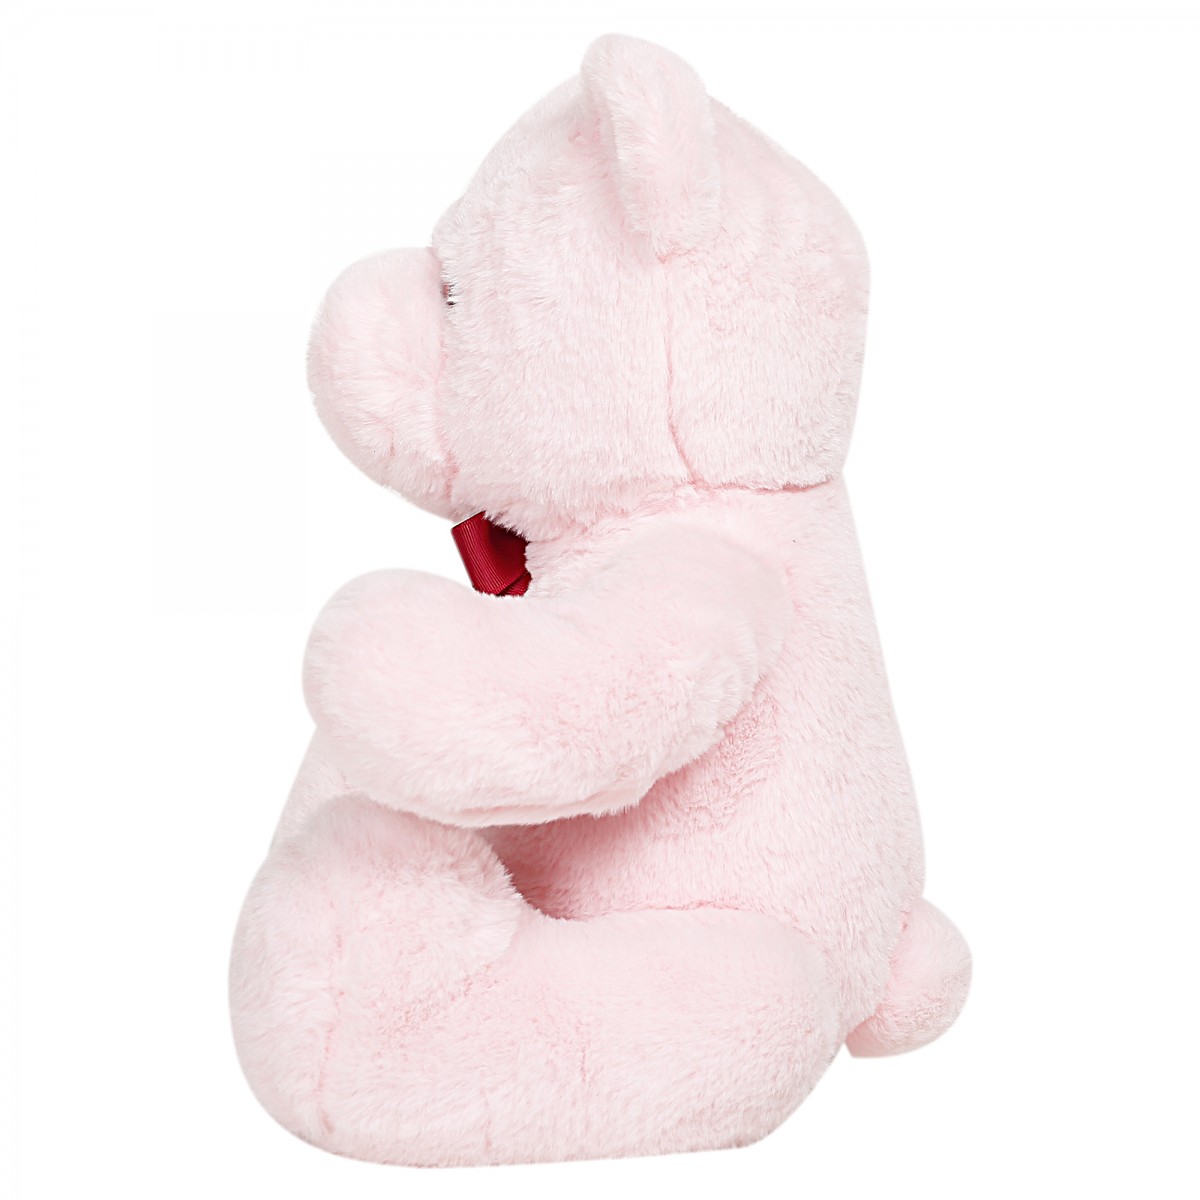 Fuzzbuzz Bear, Soft Toys for Kids, Pink, 35cm